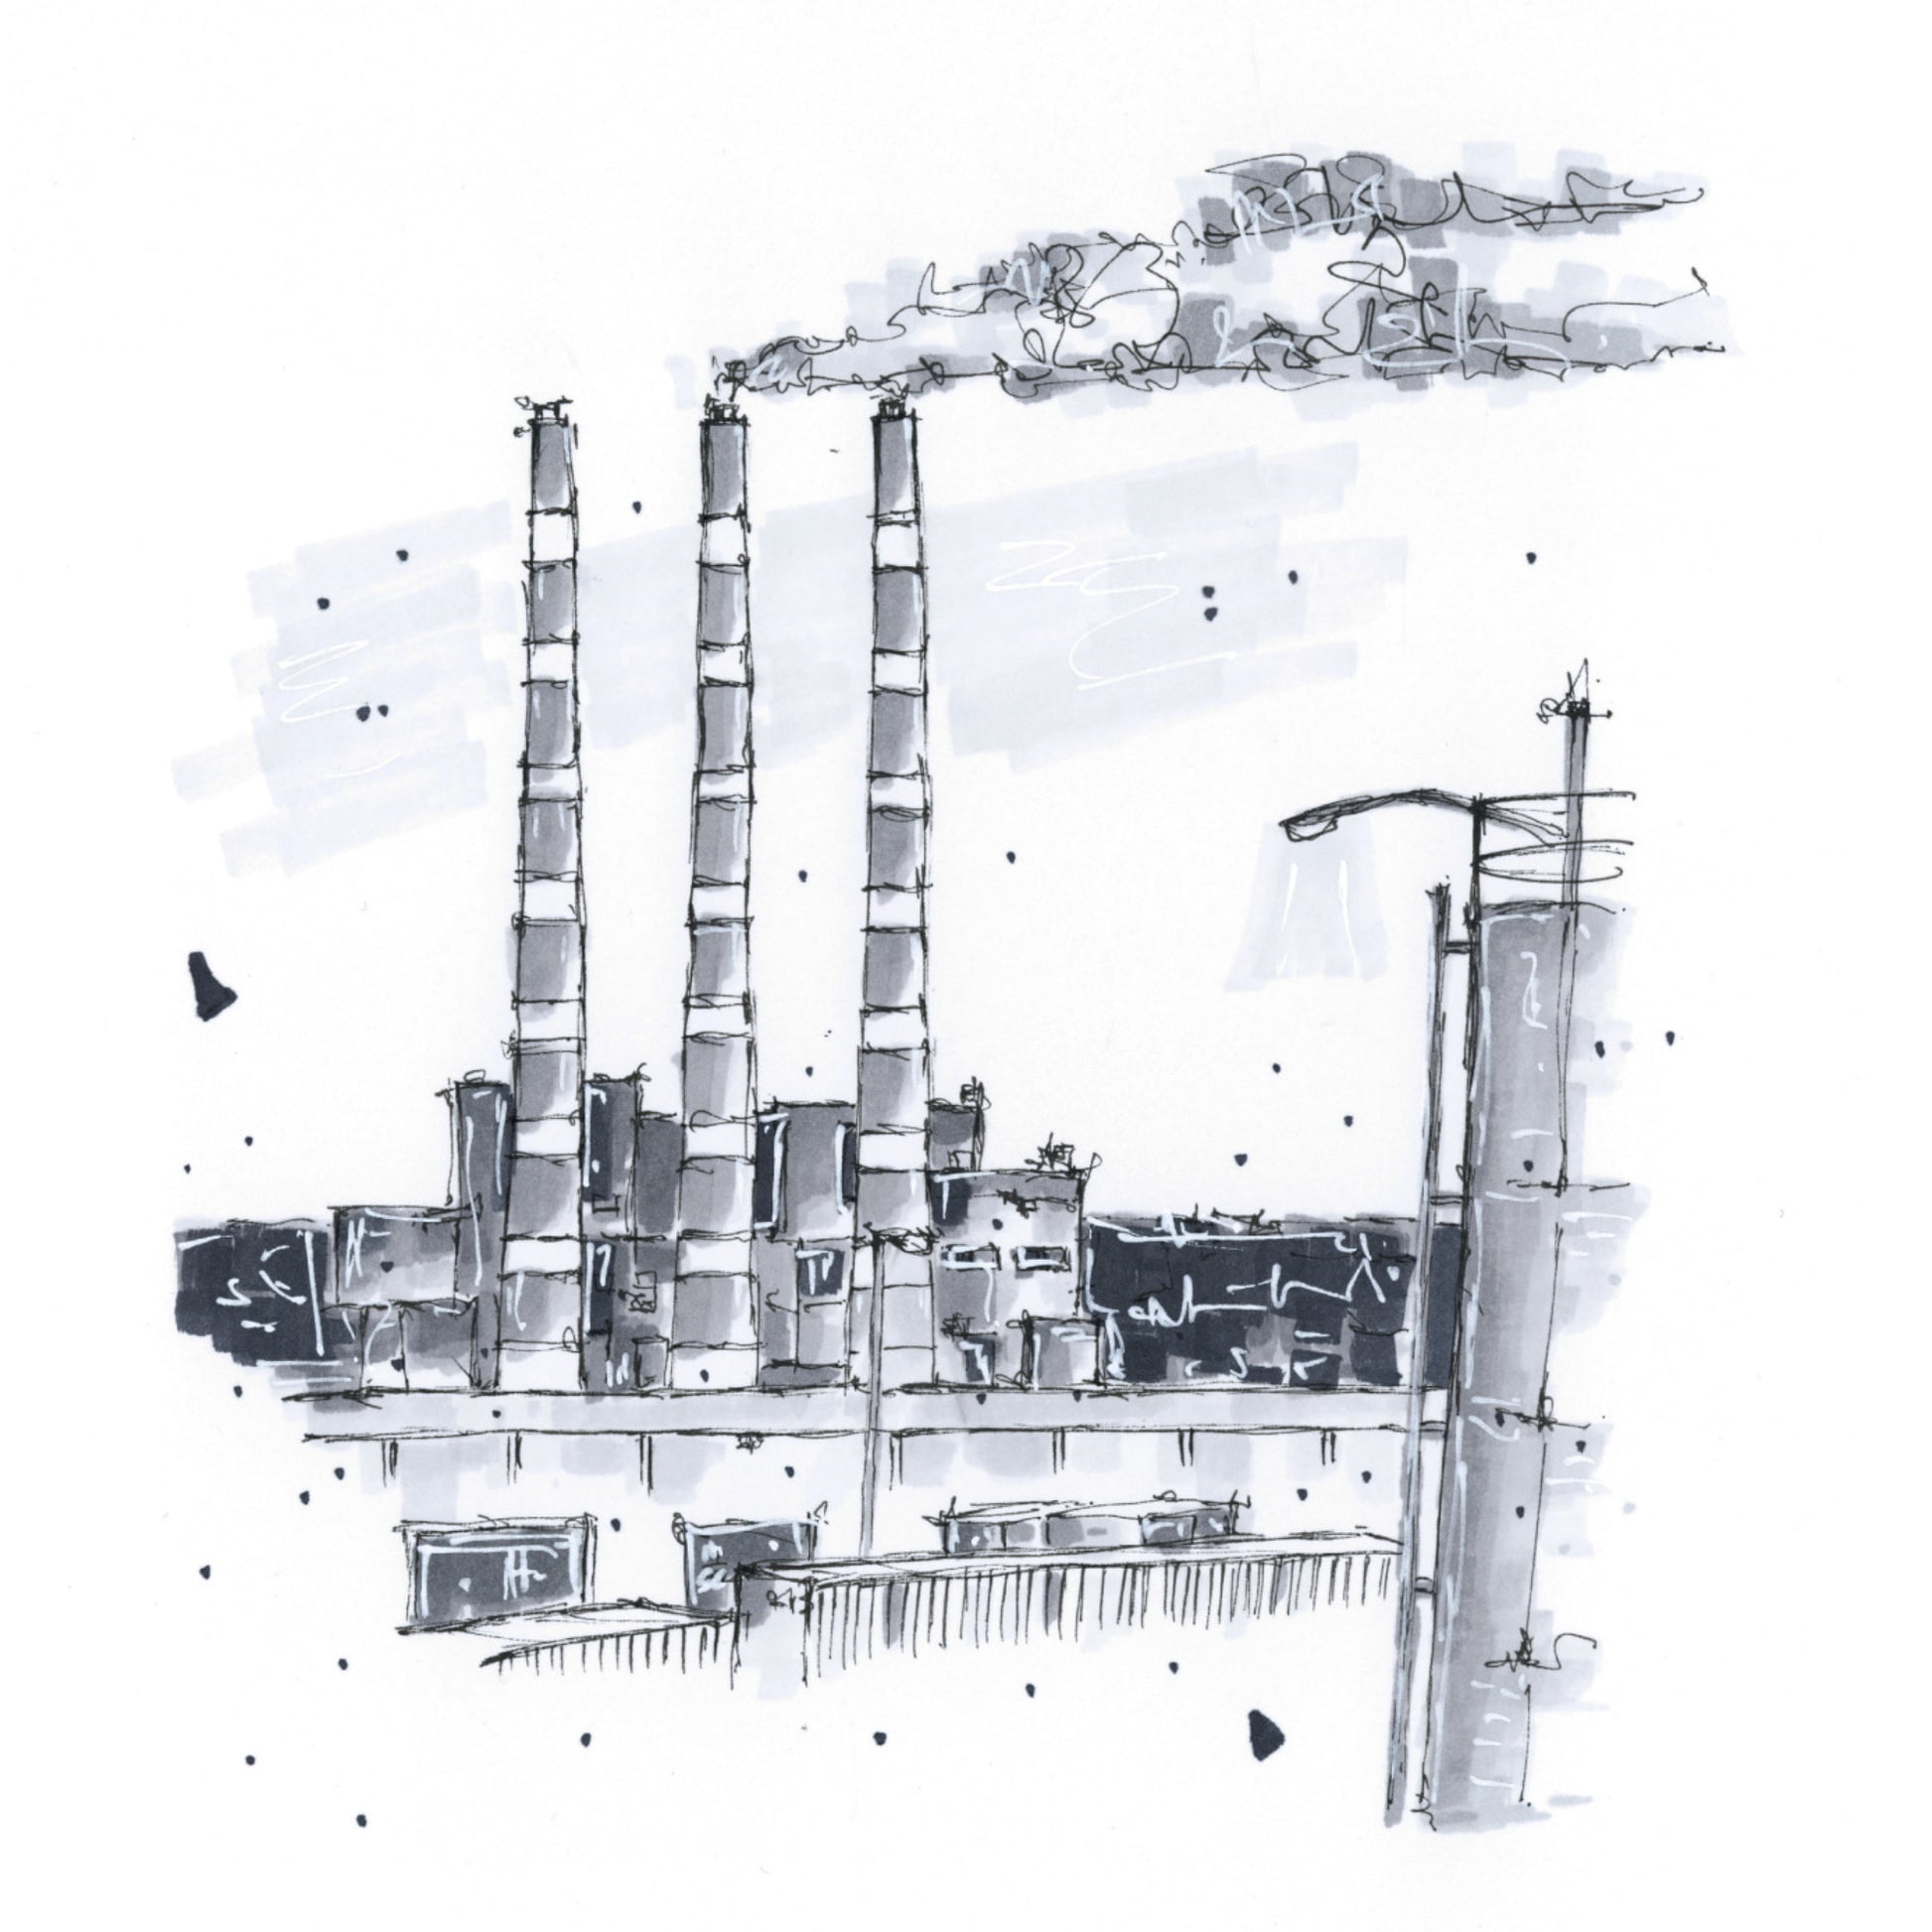 DTS0031 - Tufts Cove Generating Station Halifax Nova Scotia Sketch, Art Print - Artwork Print Sketch 2 - Downtown Sketcher